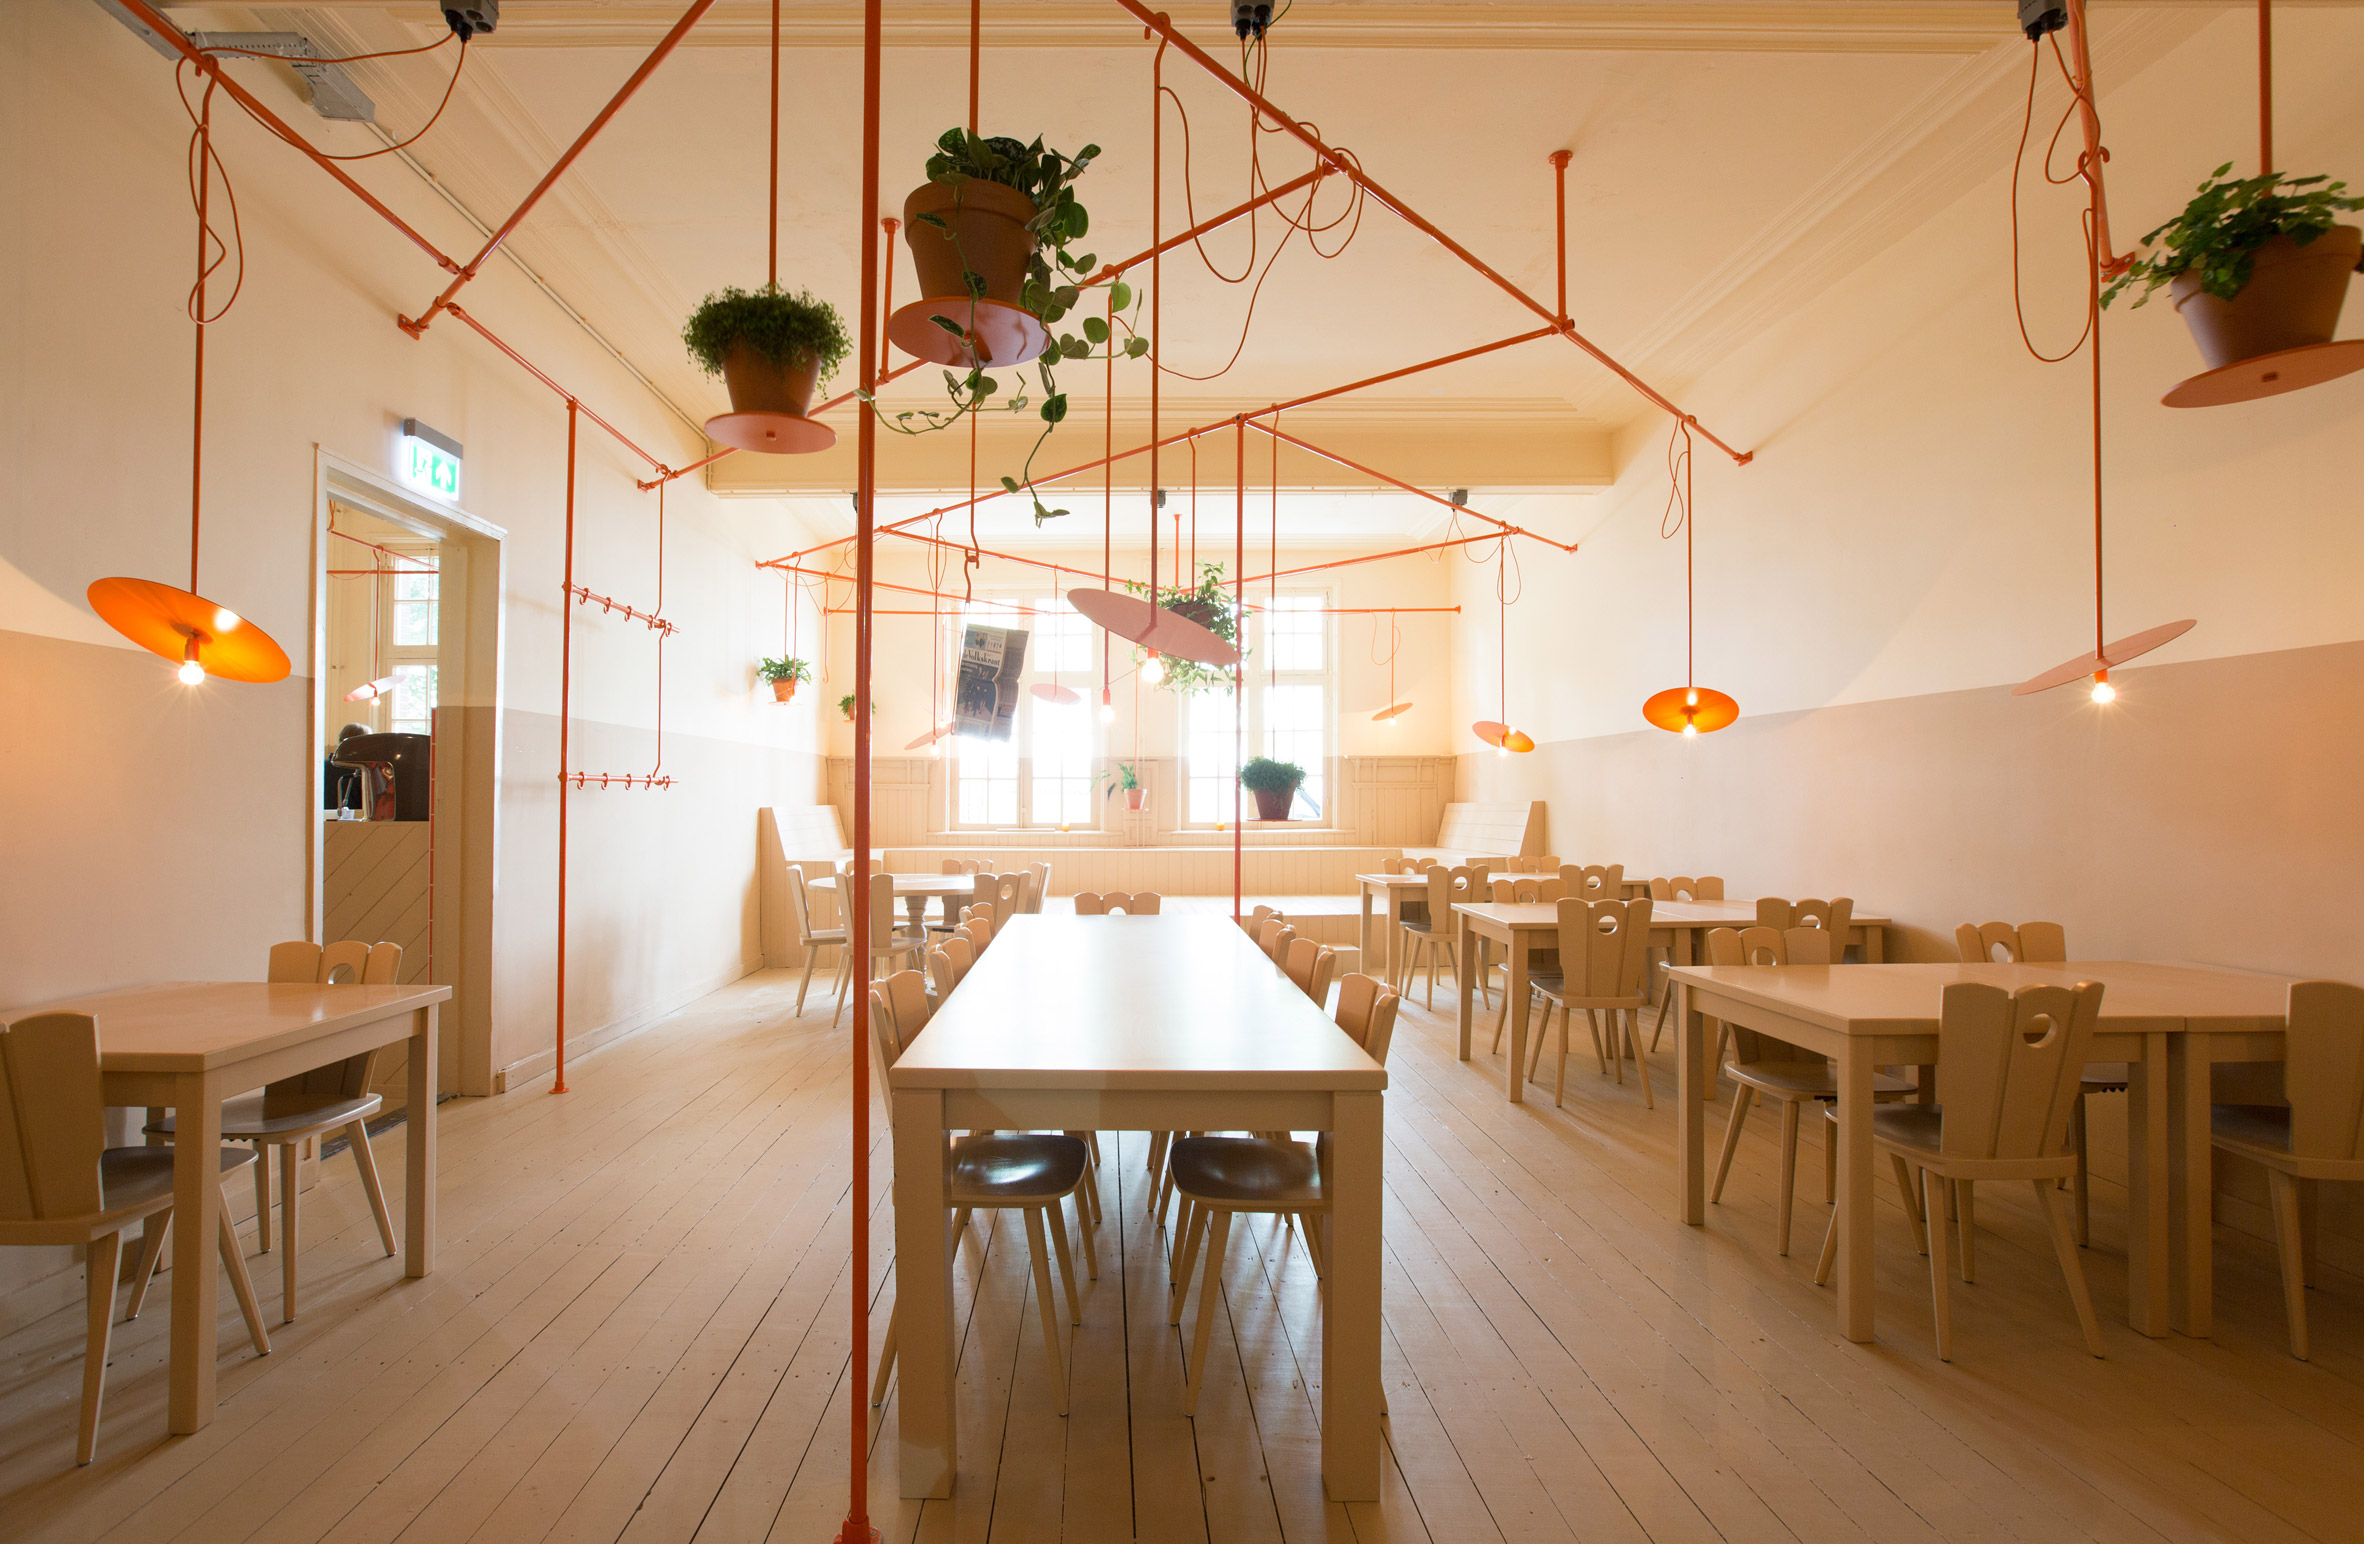 hangop-bar-concert-hall-cafe-renovation-refurbishment-interior-design-overtreders-w-the-netherlands_dezeen_2364_col_0